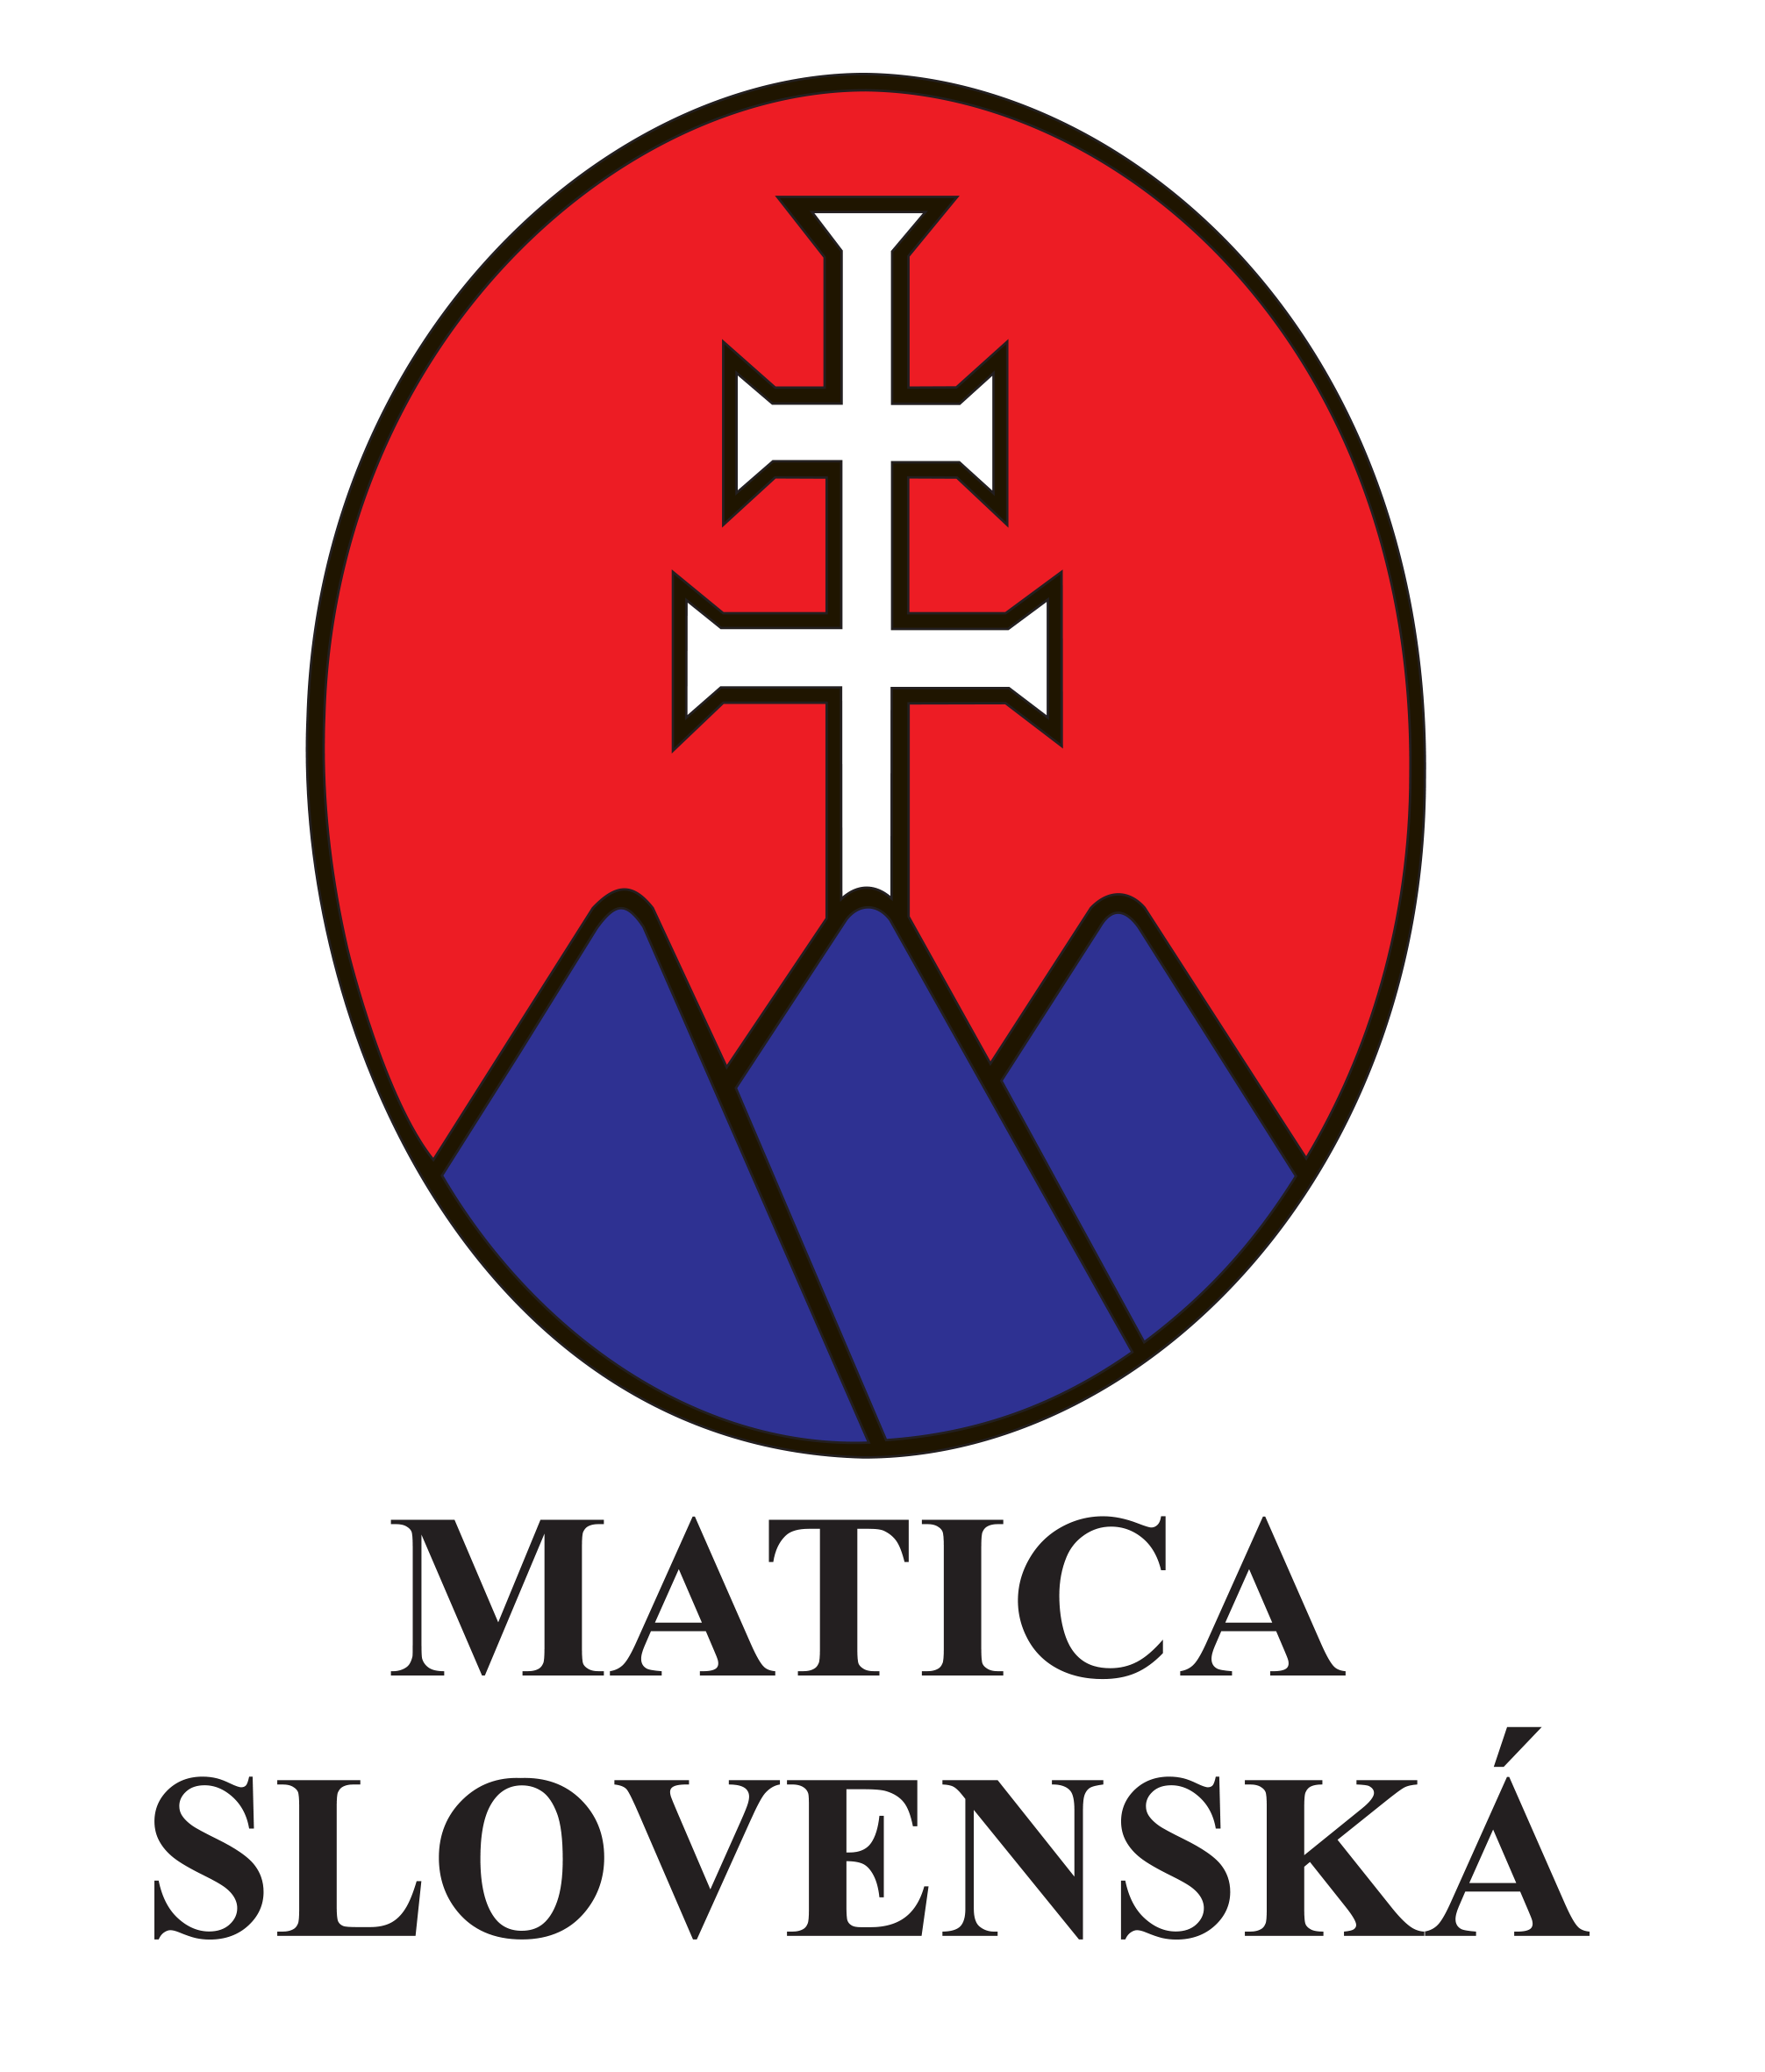 Matica Slovenská logo